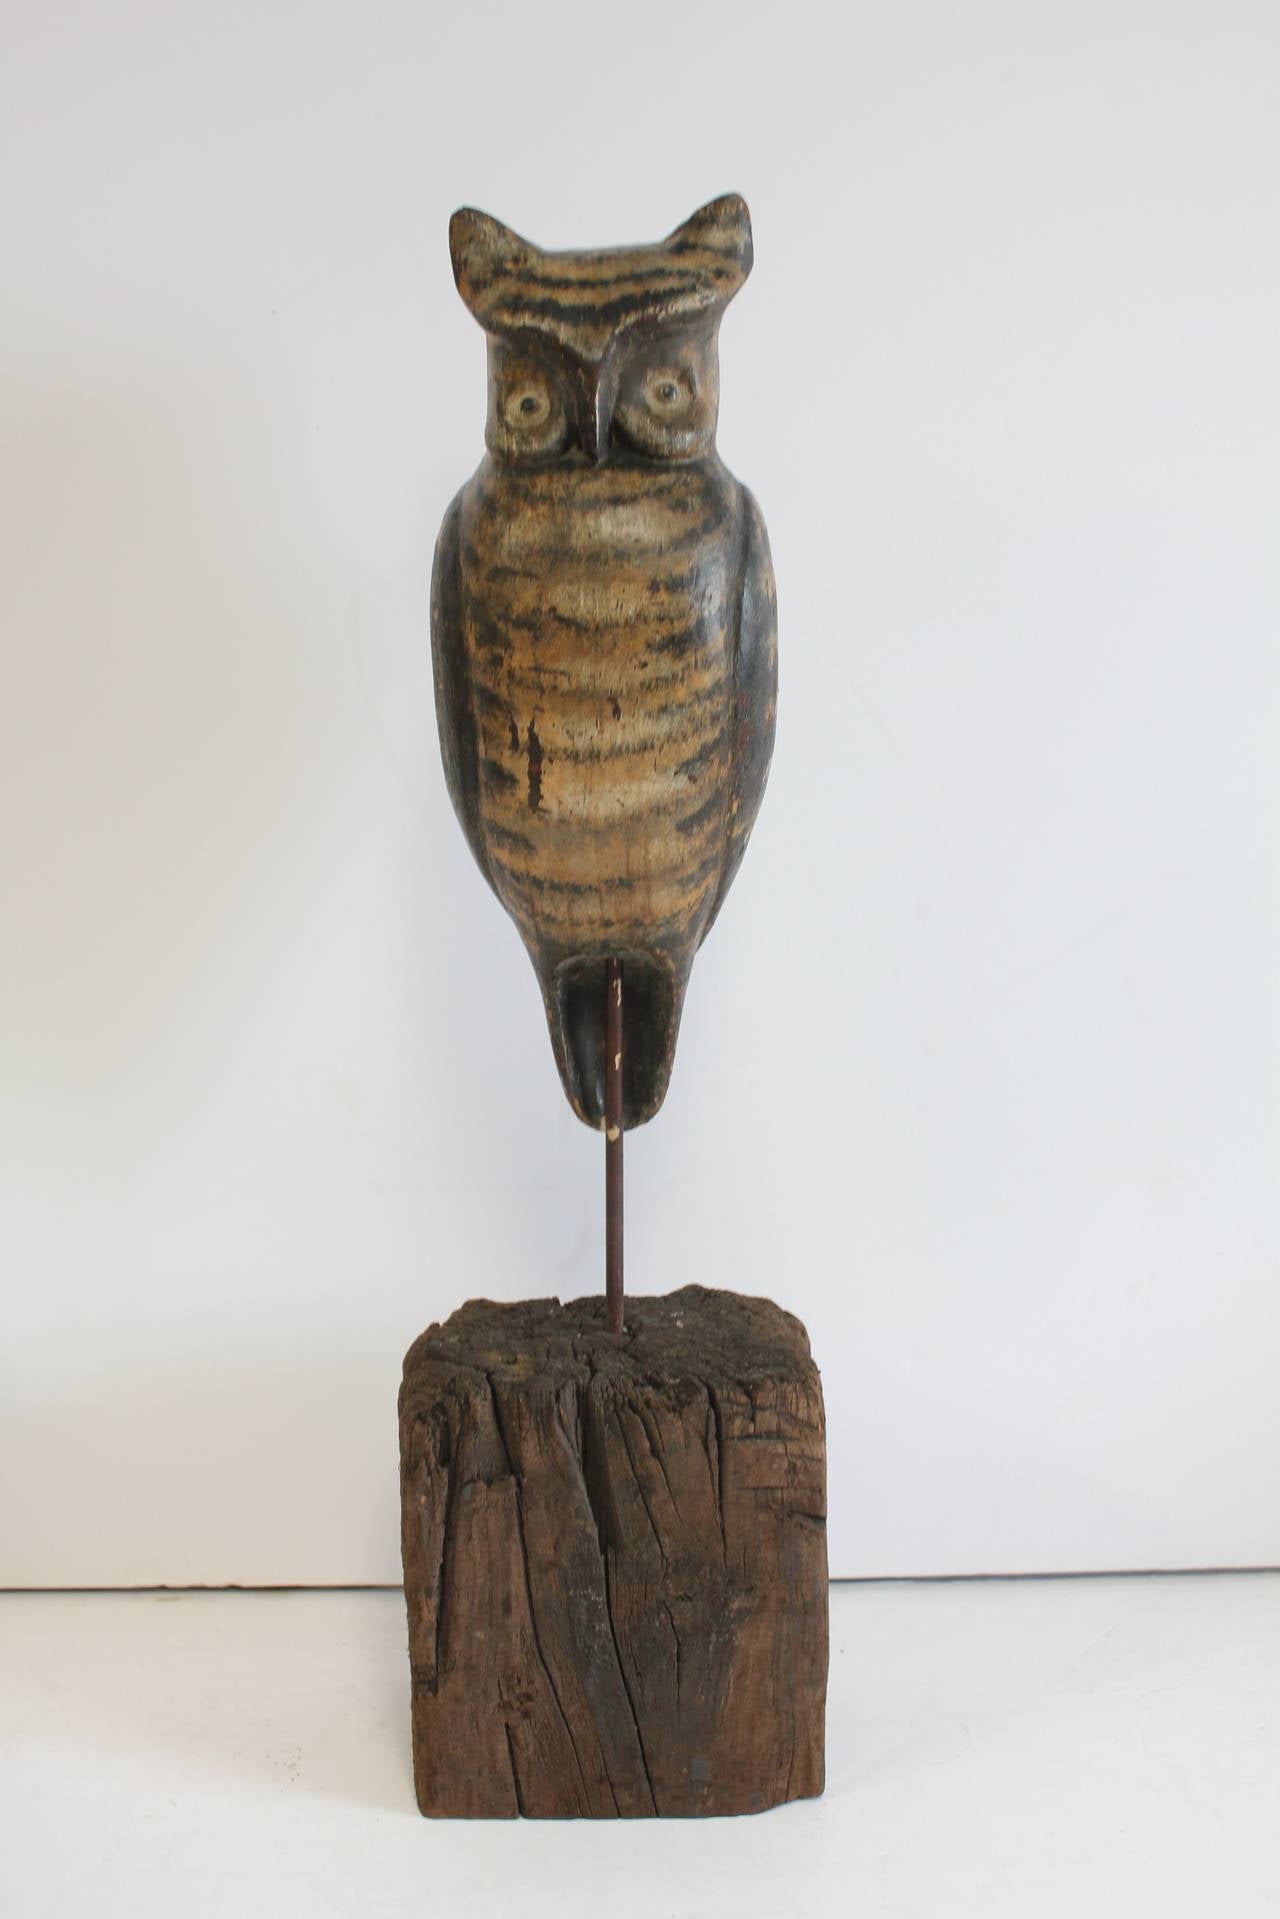 Rare antique American Folk Art wooden owl decoy.